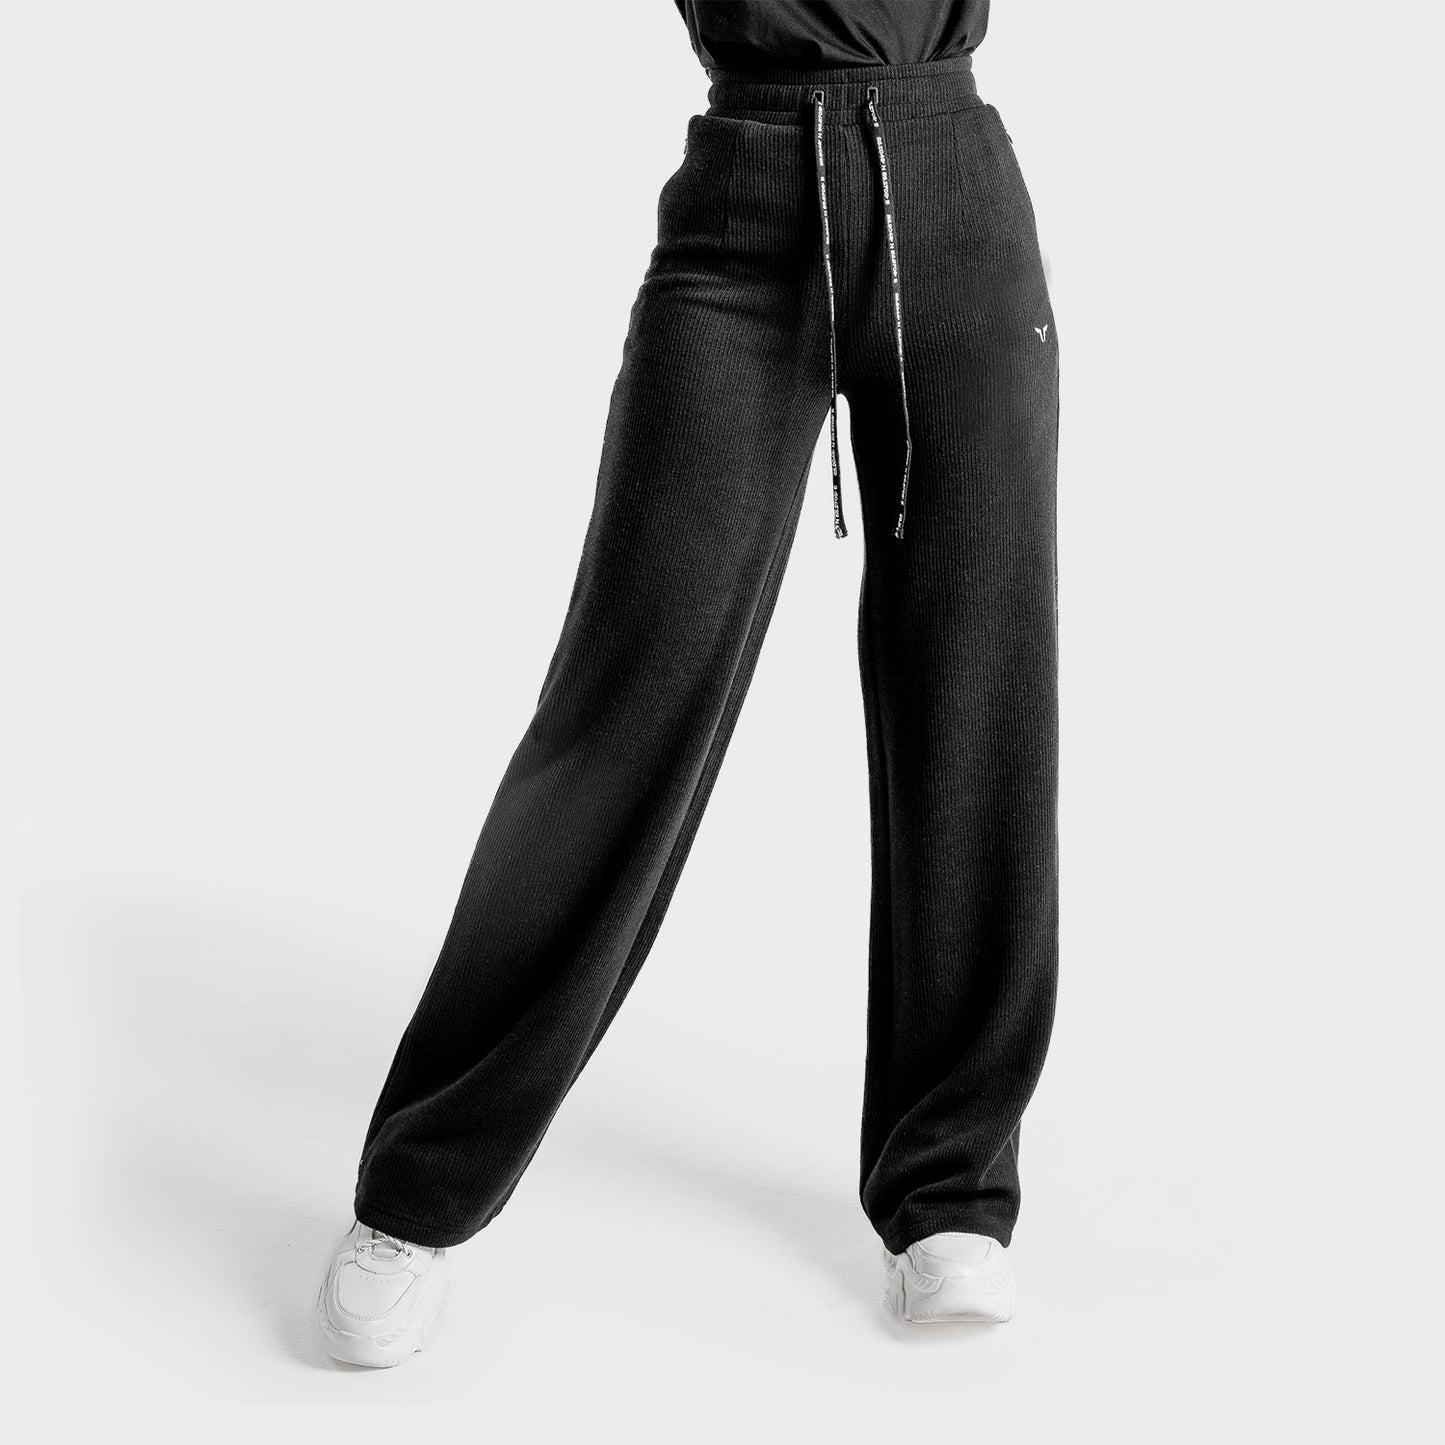 ZheElen Yoga Pants Women Sports Wide-Leg Trouser Fast Dry Outdoor Pants,  Black, S Grey XL 